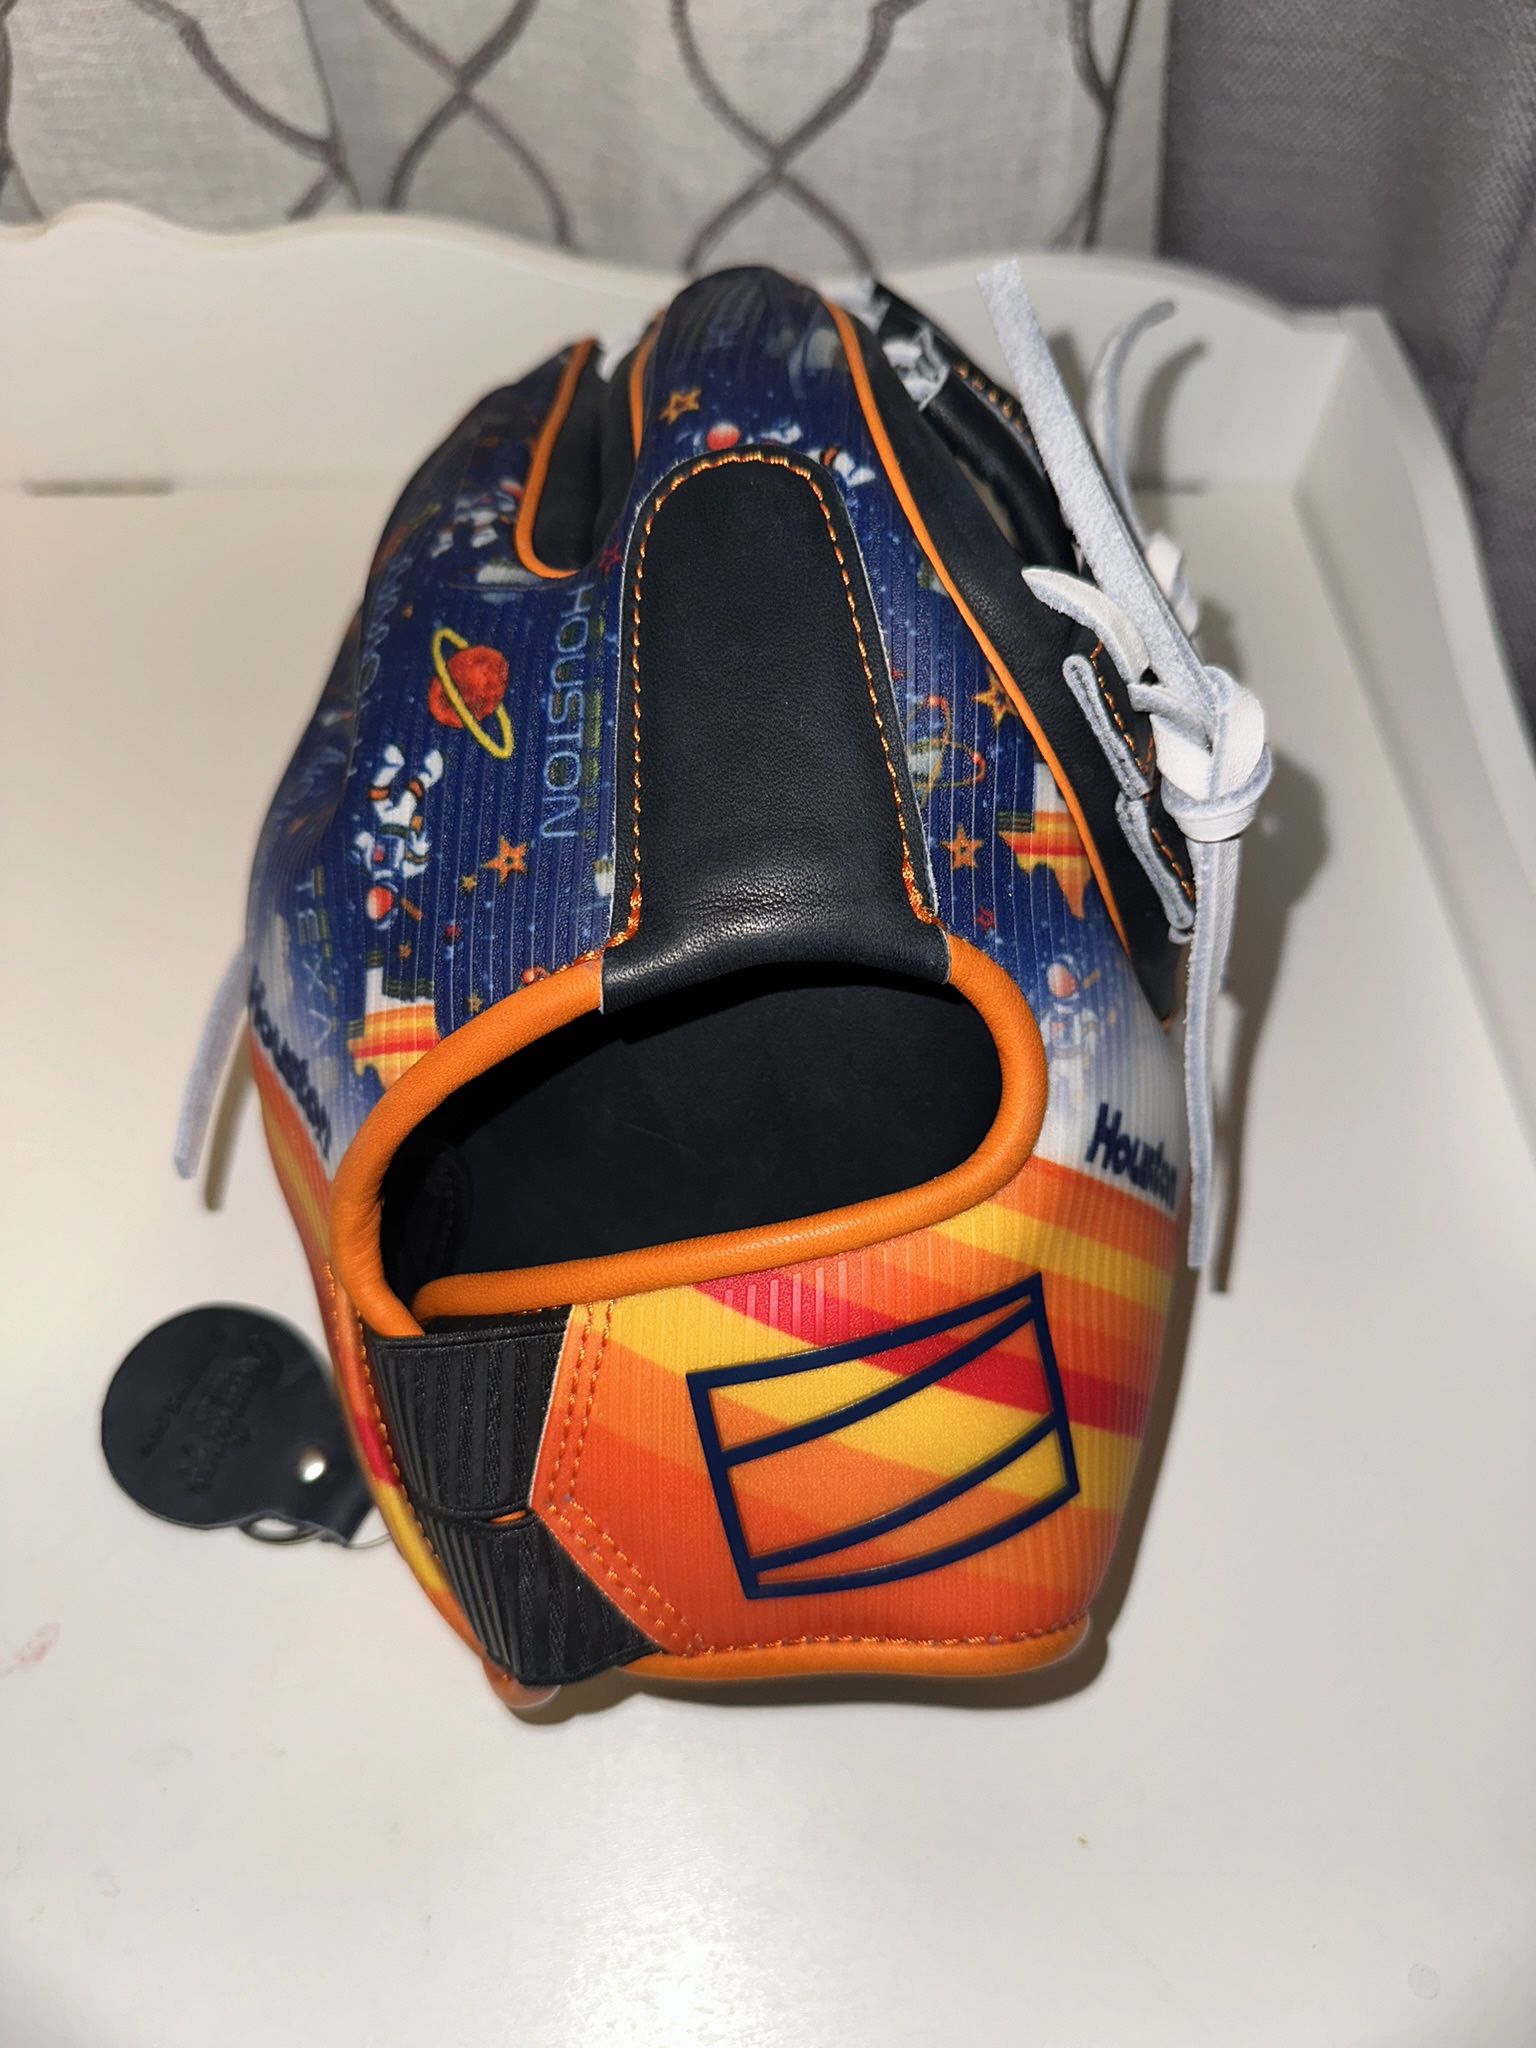 Rawlings REV1X Houston Edition Baseball Glove